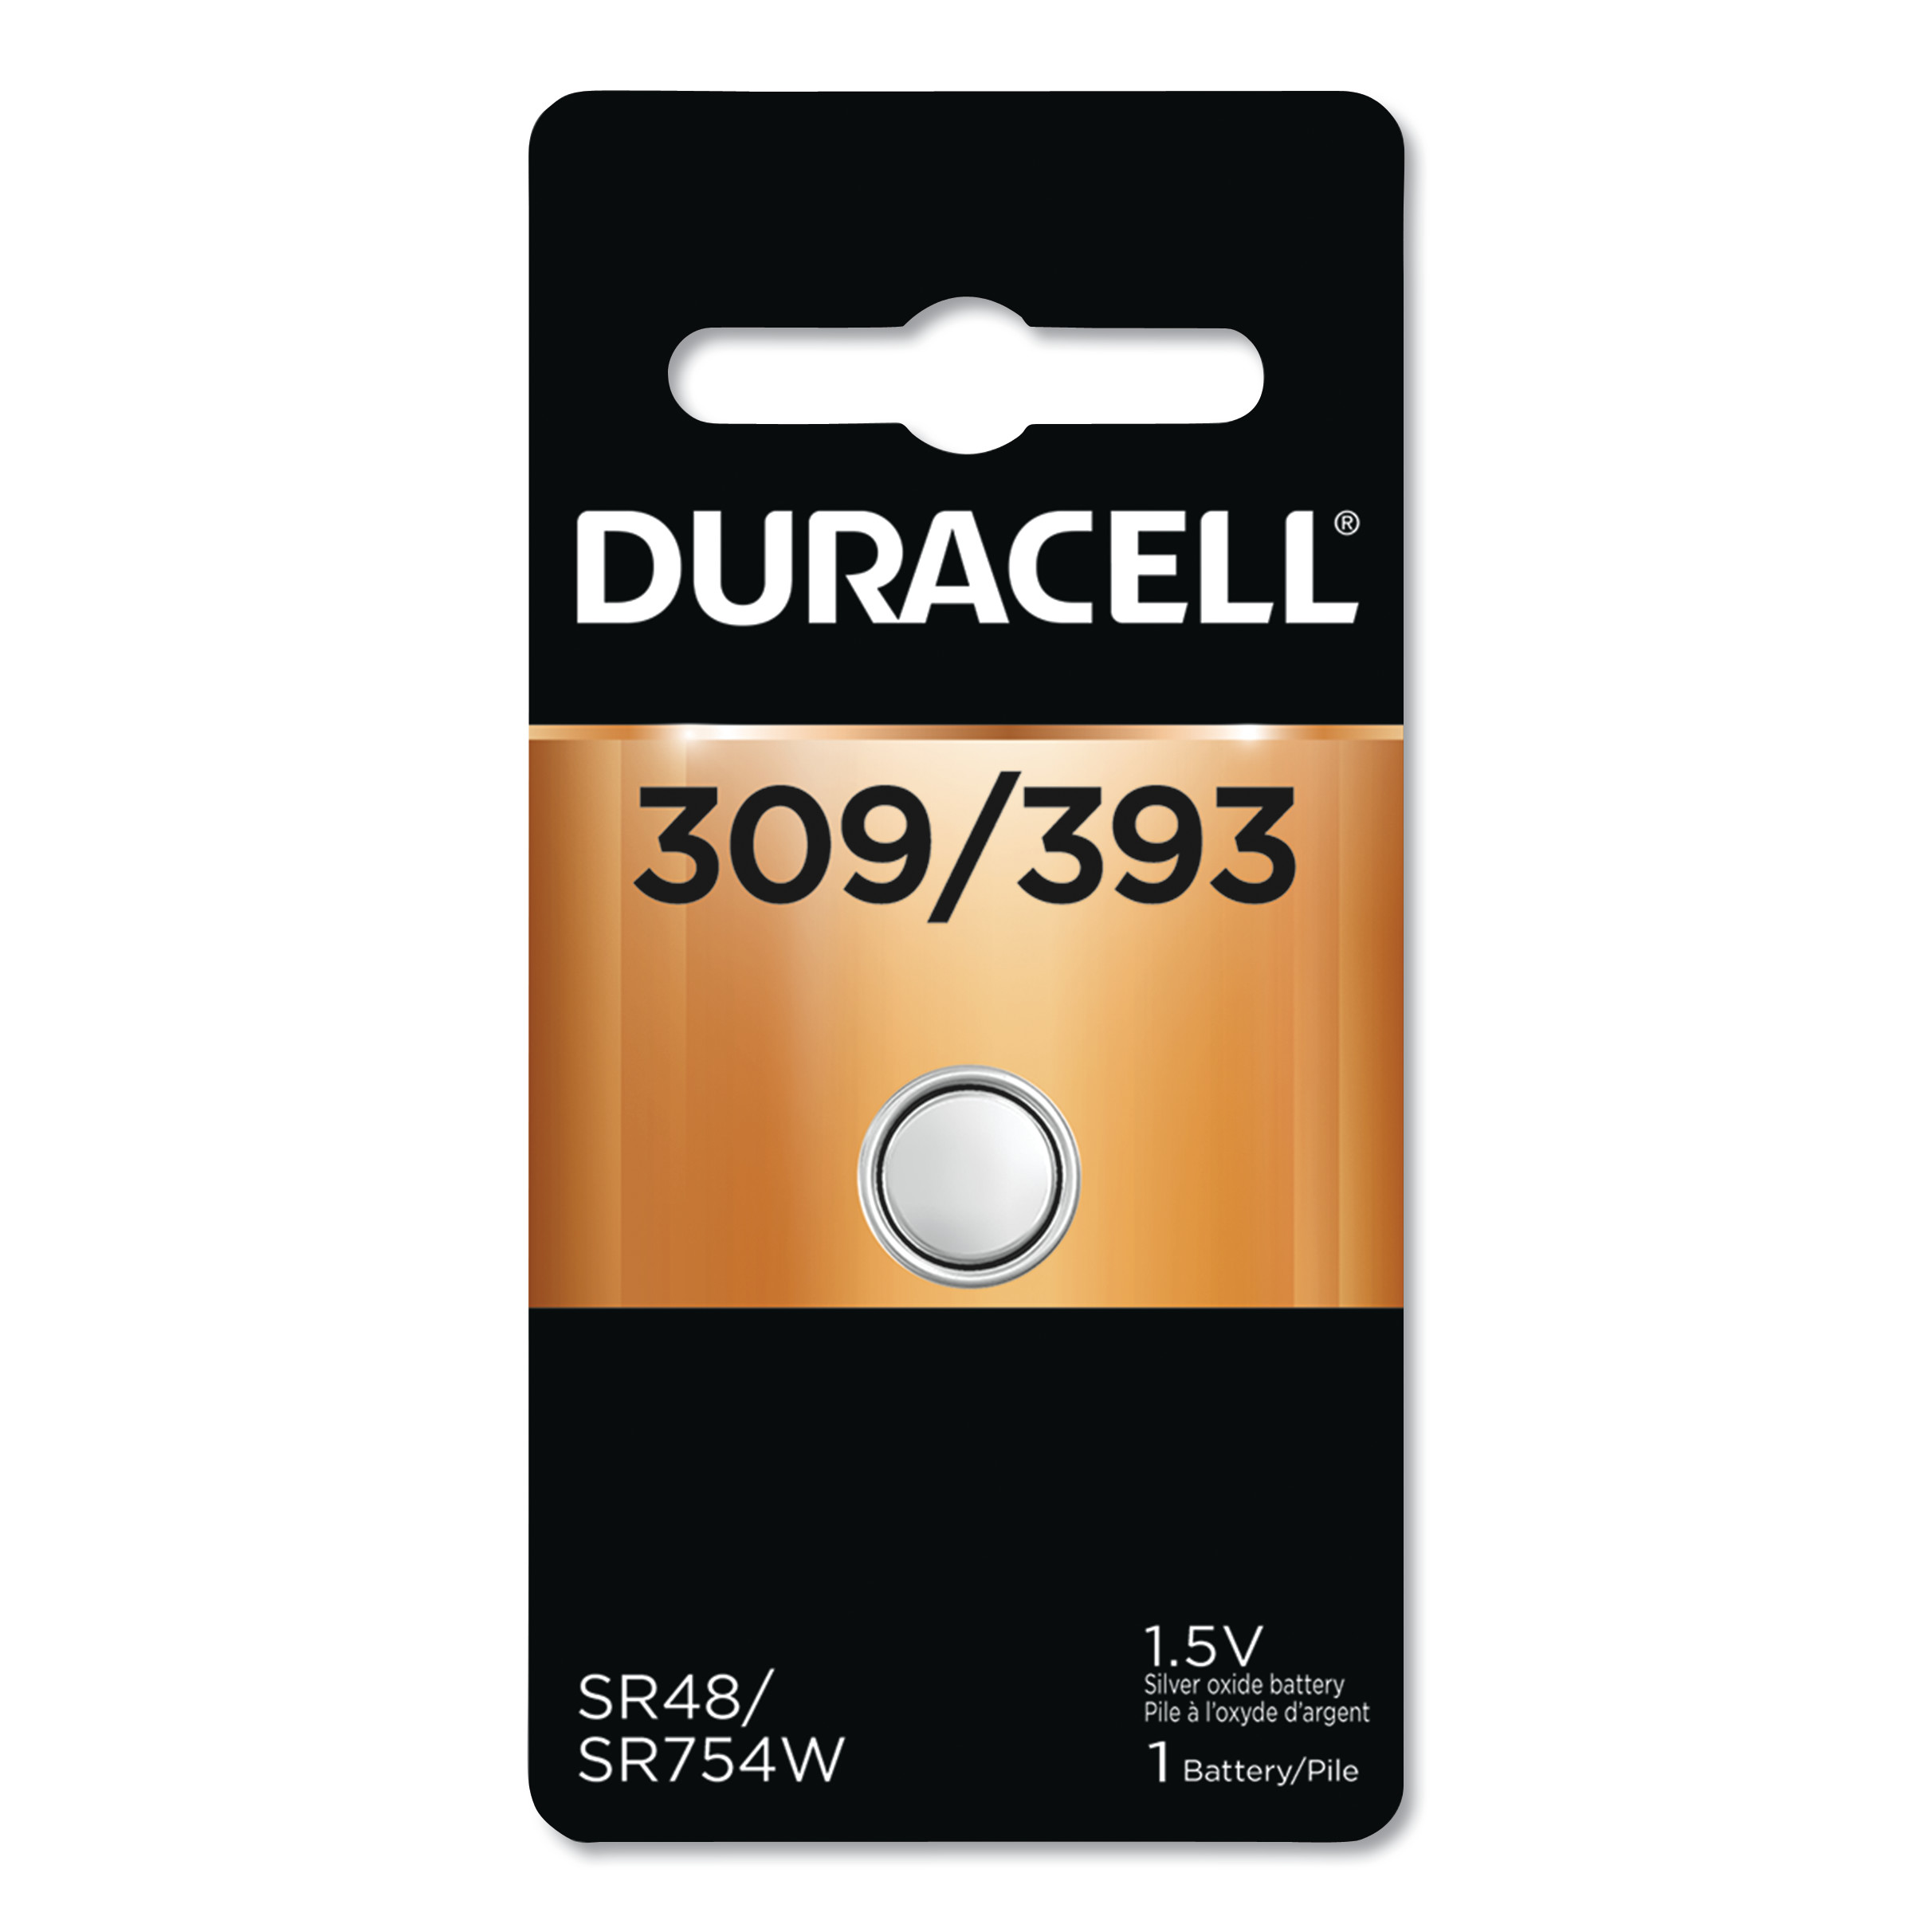  Duracell DUR309/393BPK Button Cell Battery, 309/393, 1.5V (DURD309393) 